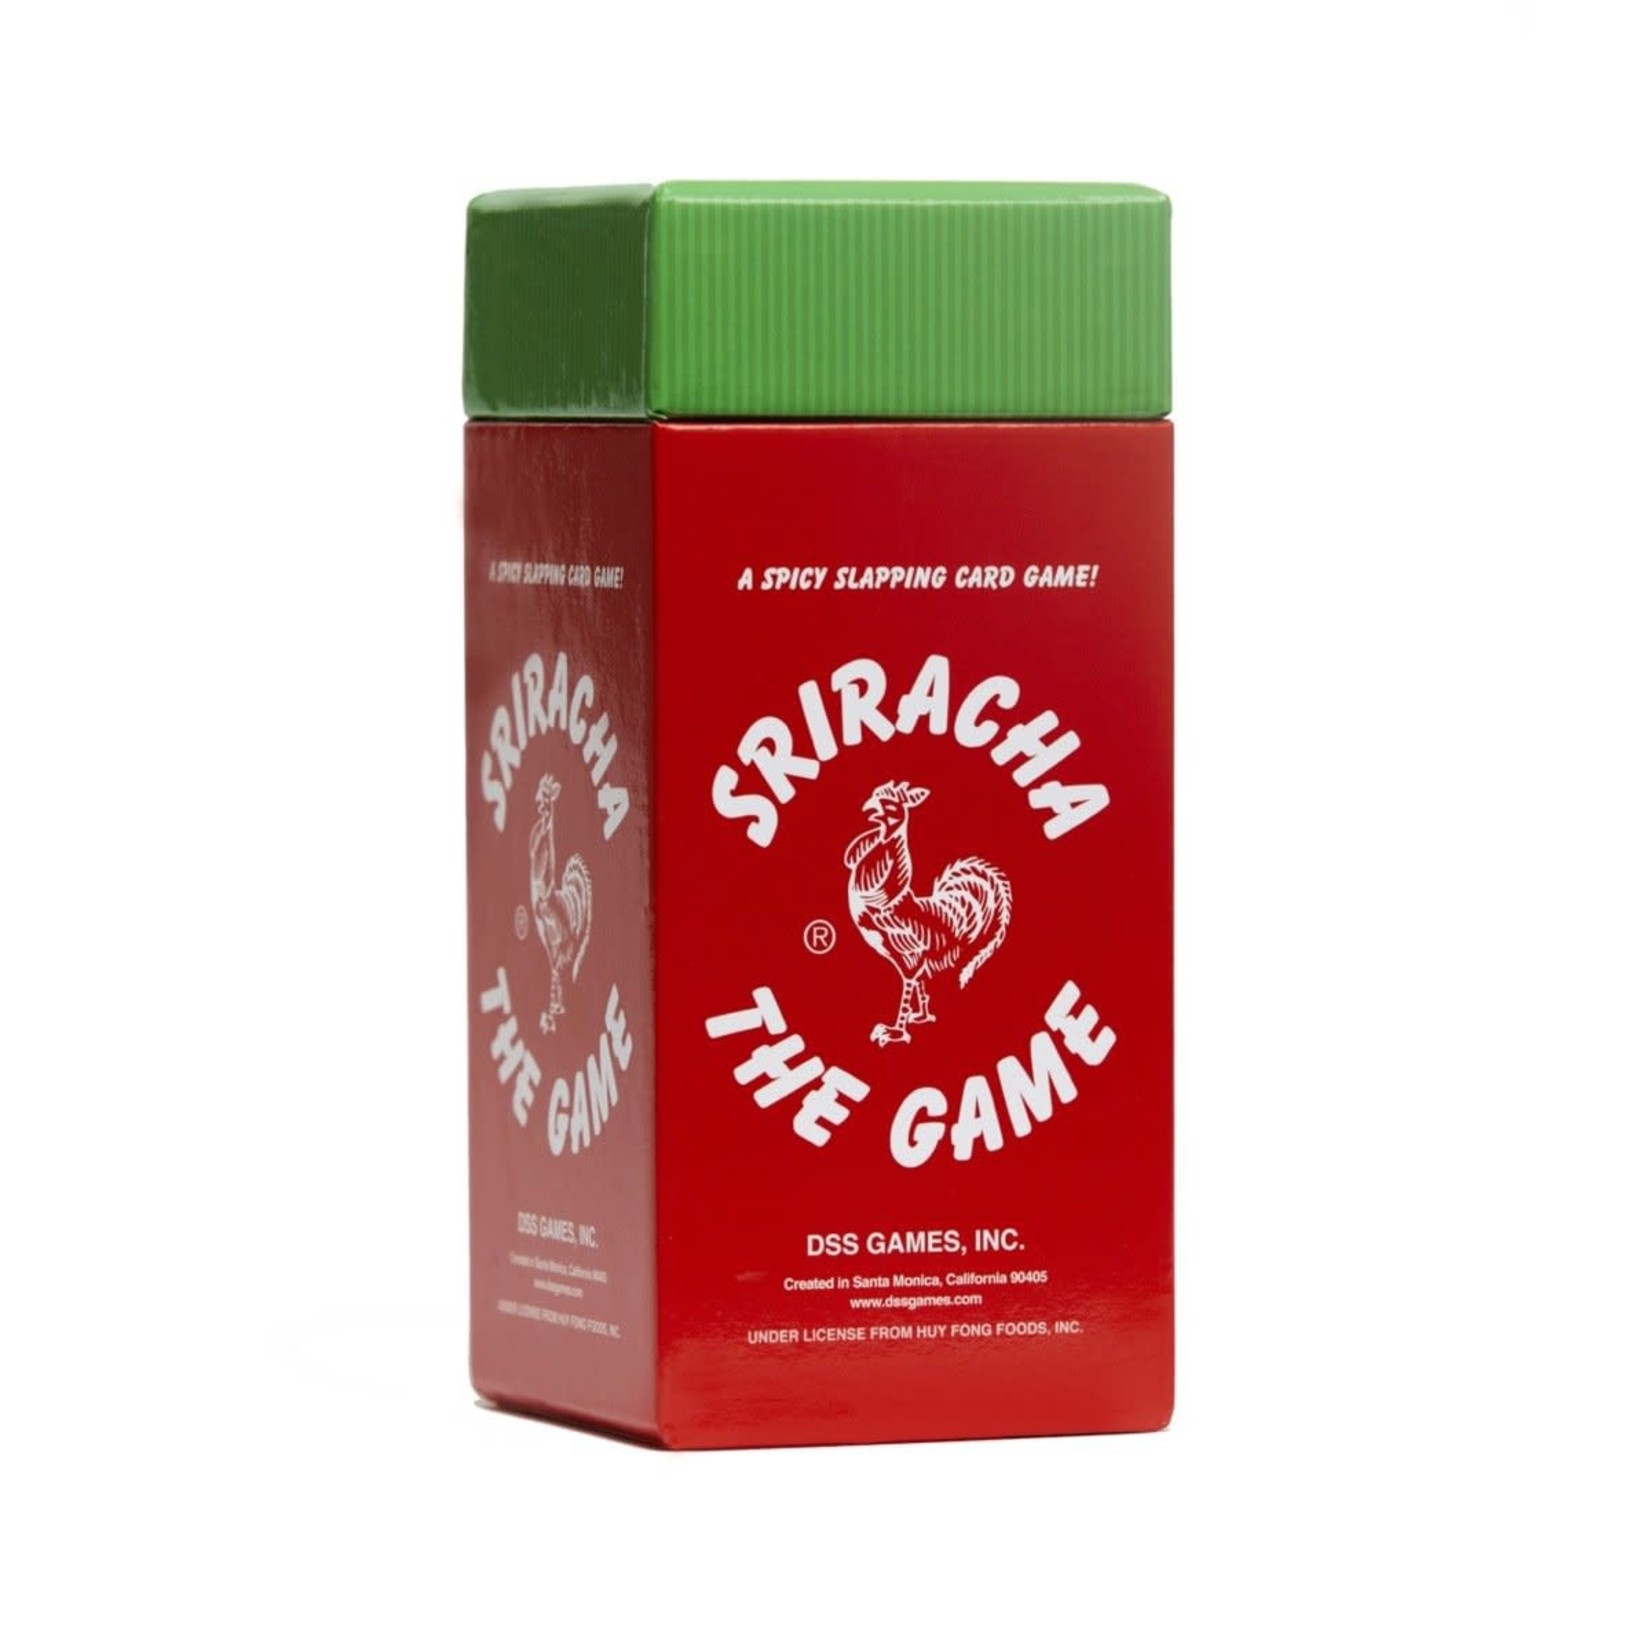 DSS Games Sriracha: The Game!